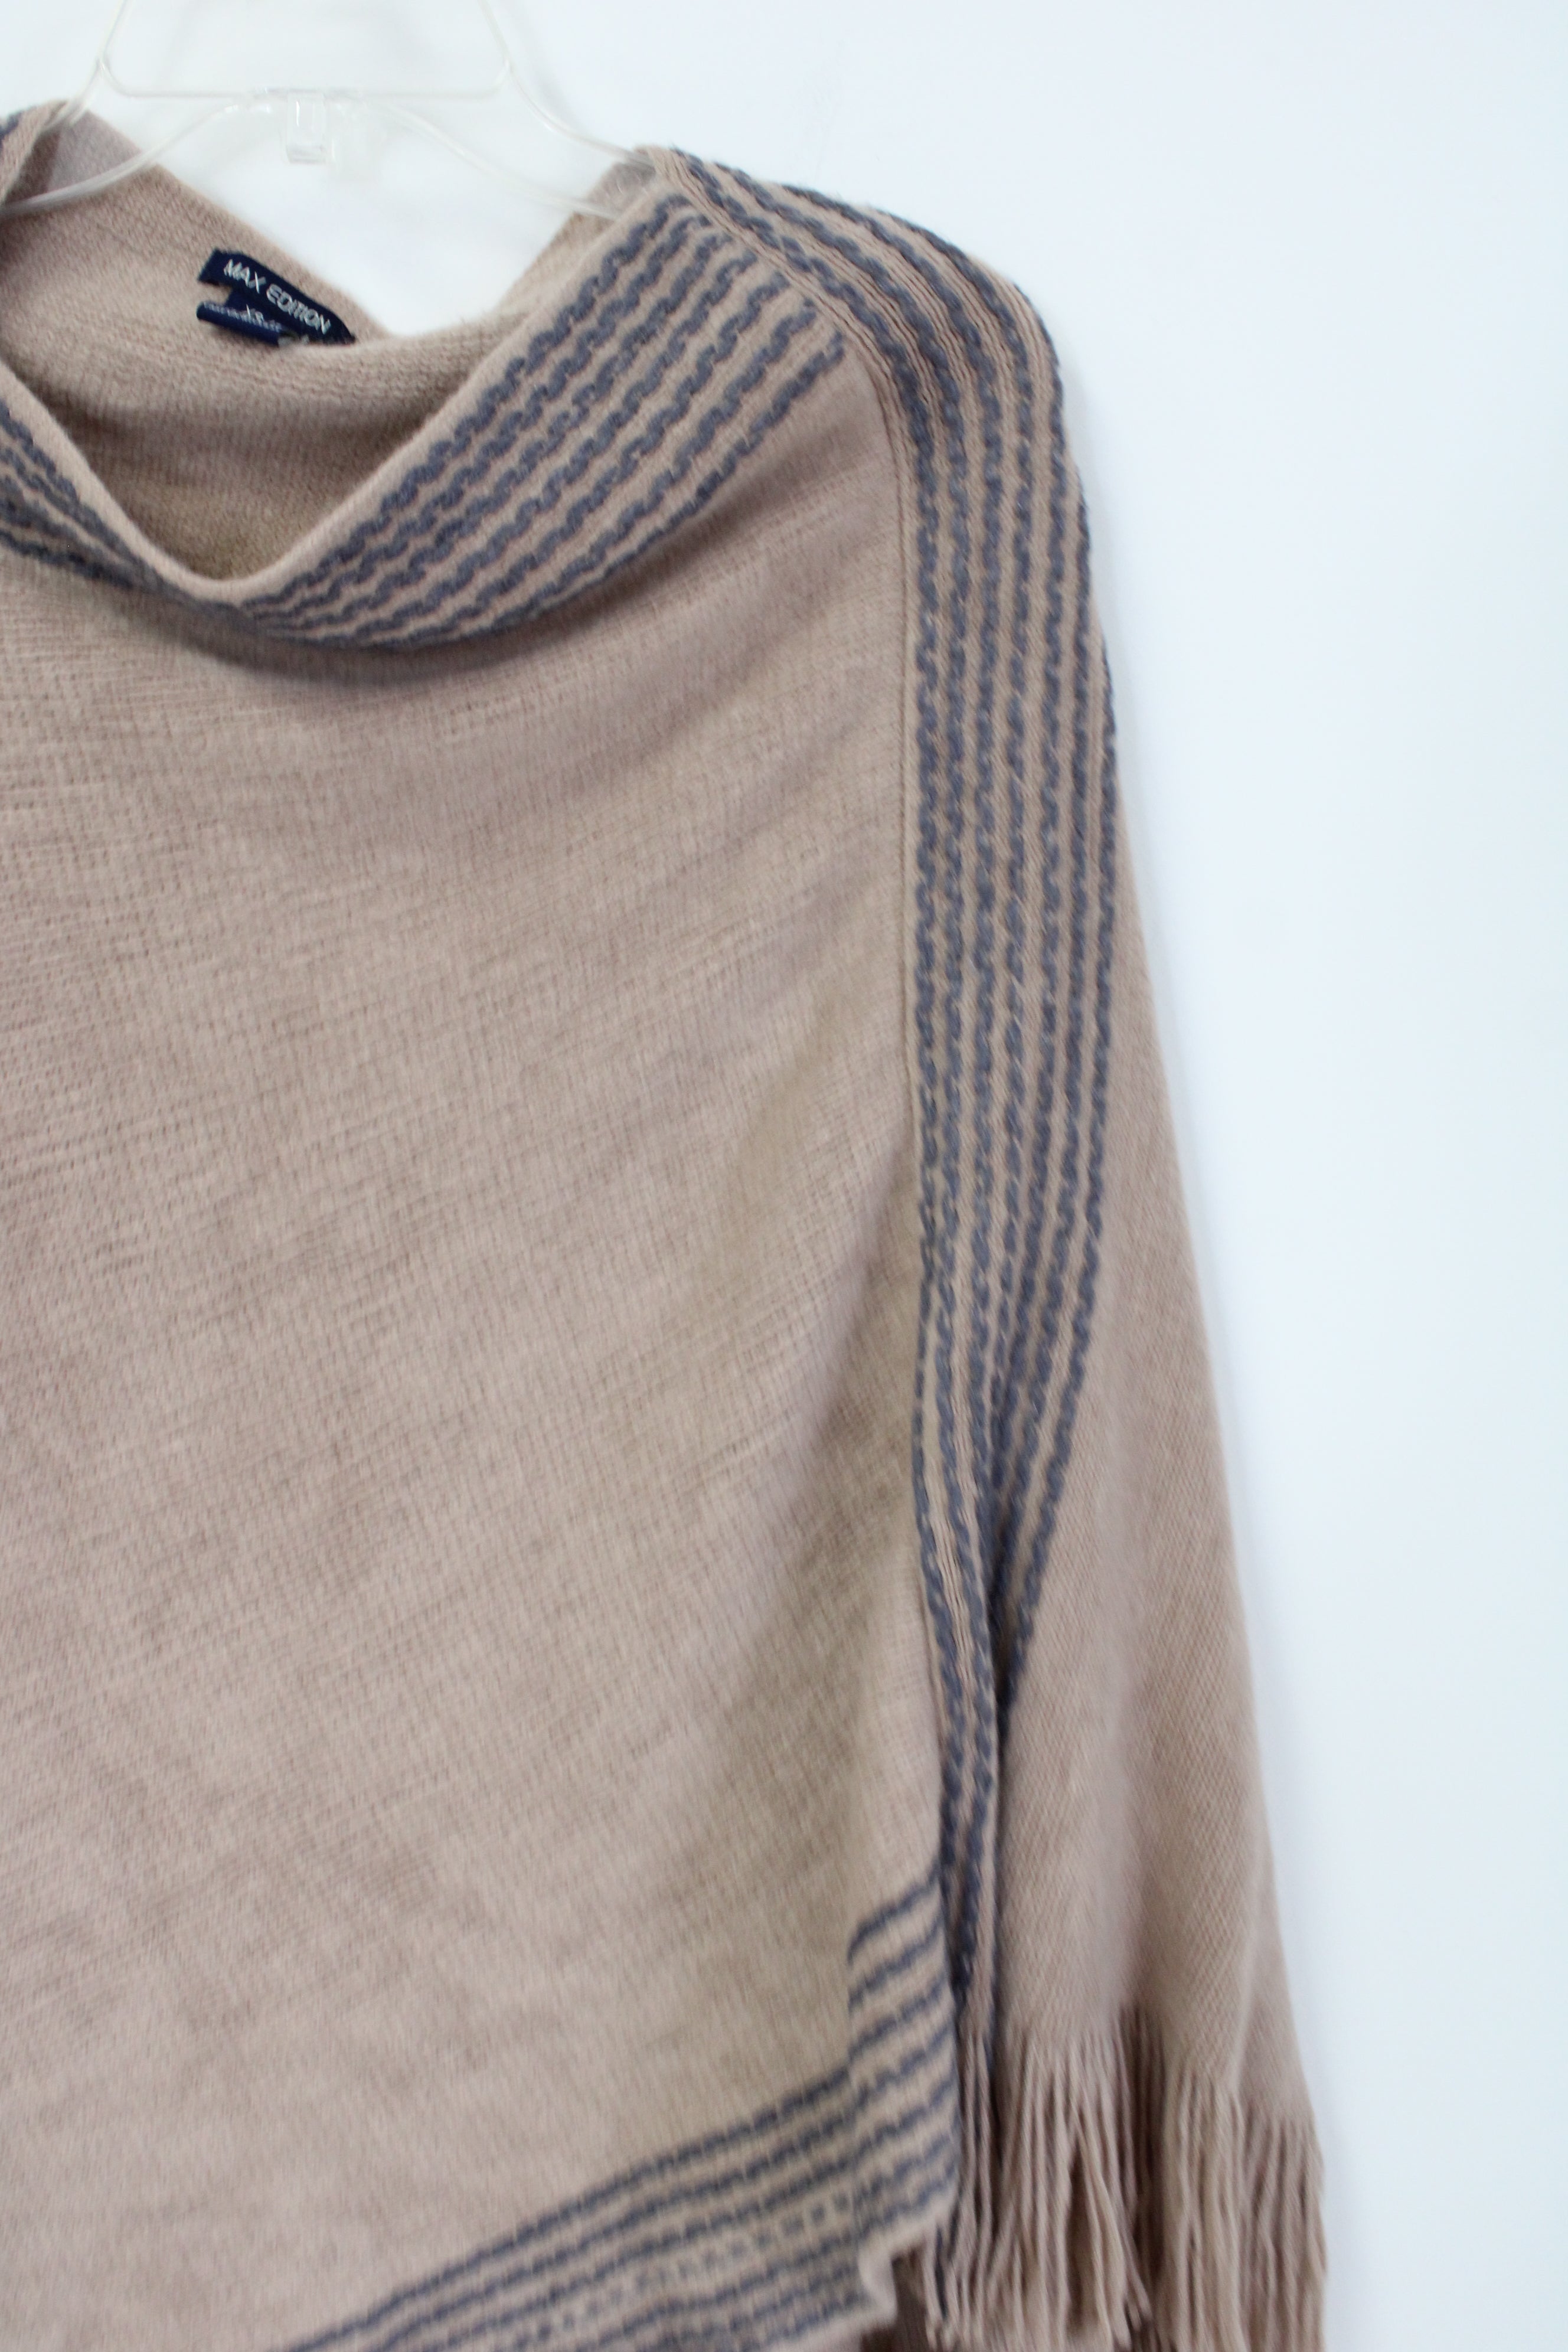 Max Edition Tan & Gray Knit Poncho Sweater | XS/S